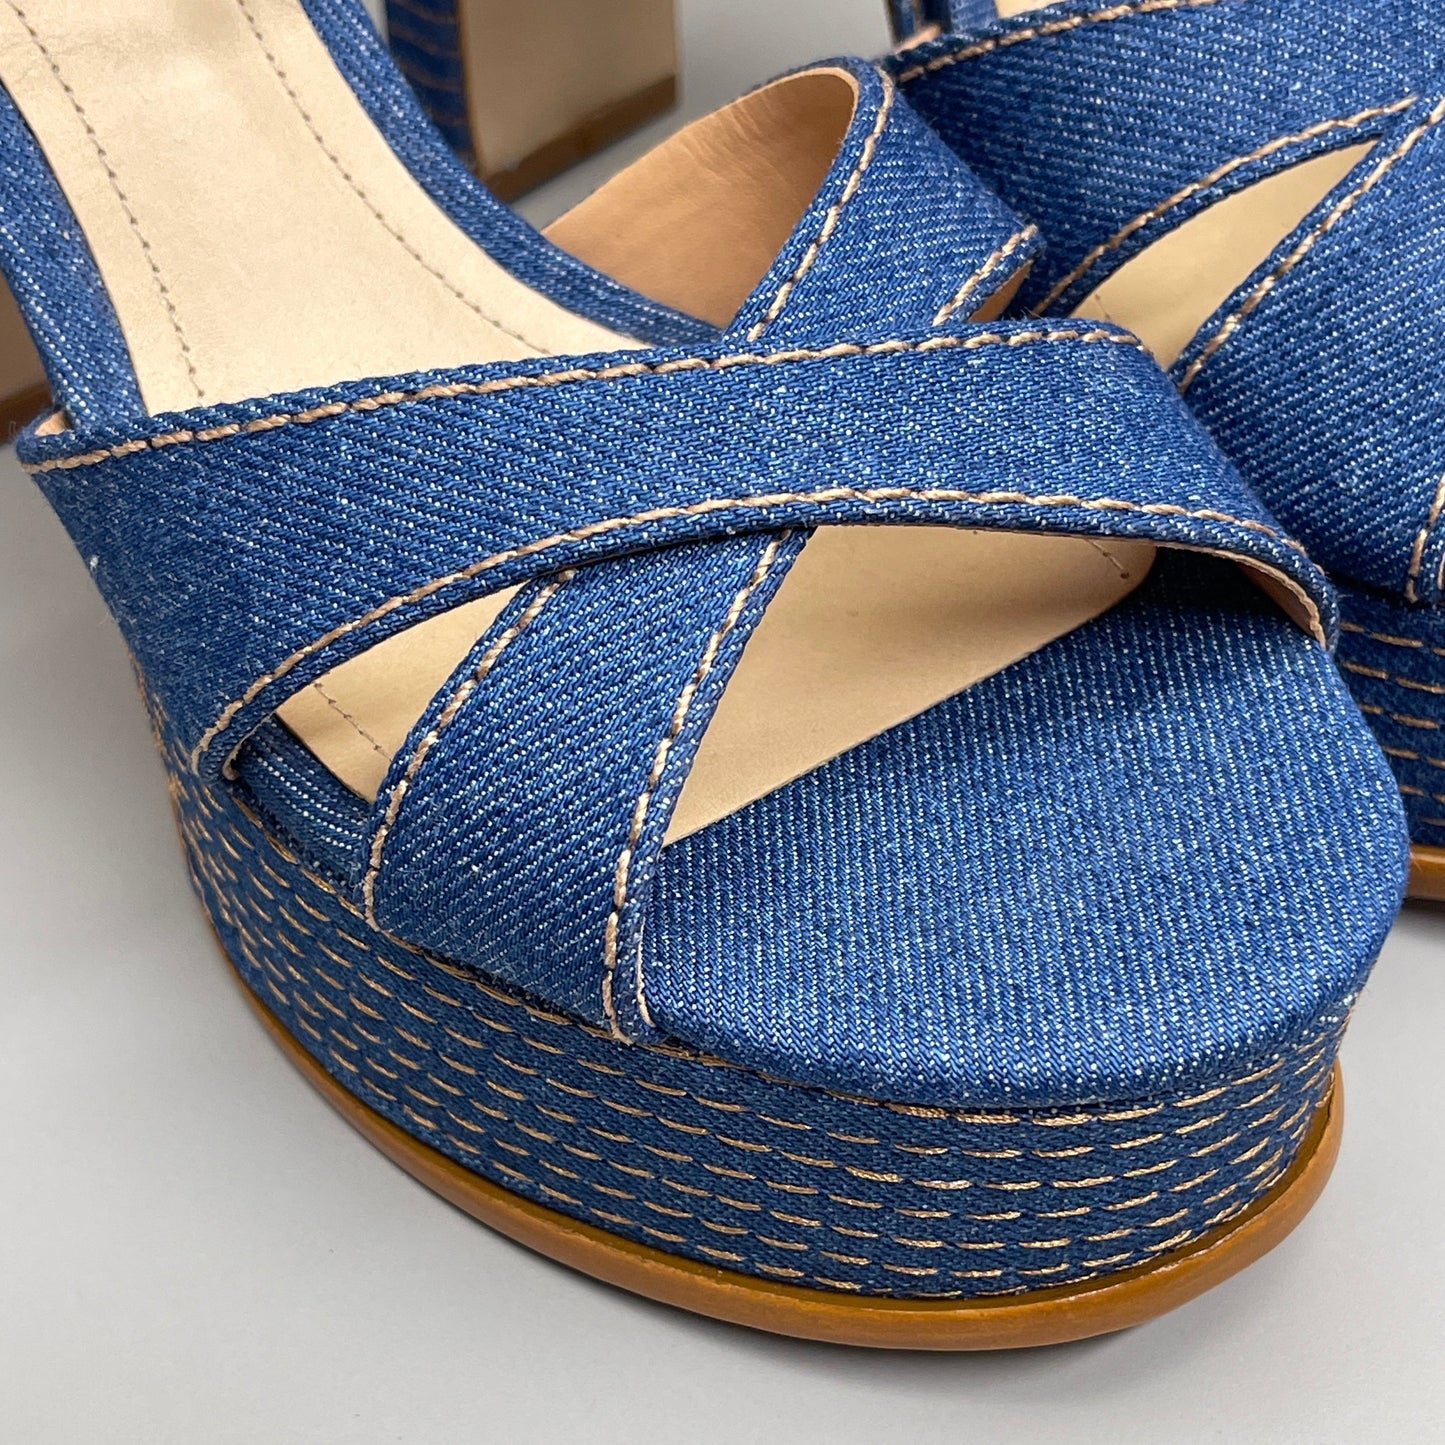 SCHUTZ Keefa Casual Denim Women's 4" Heeled Sandal Platform Blue Sz 6.5B (New)